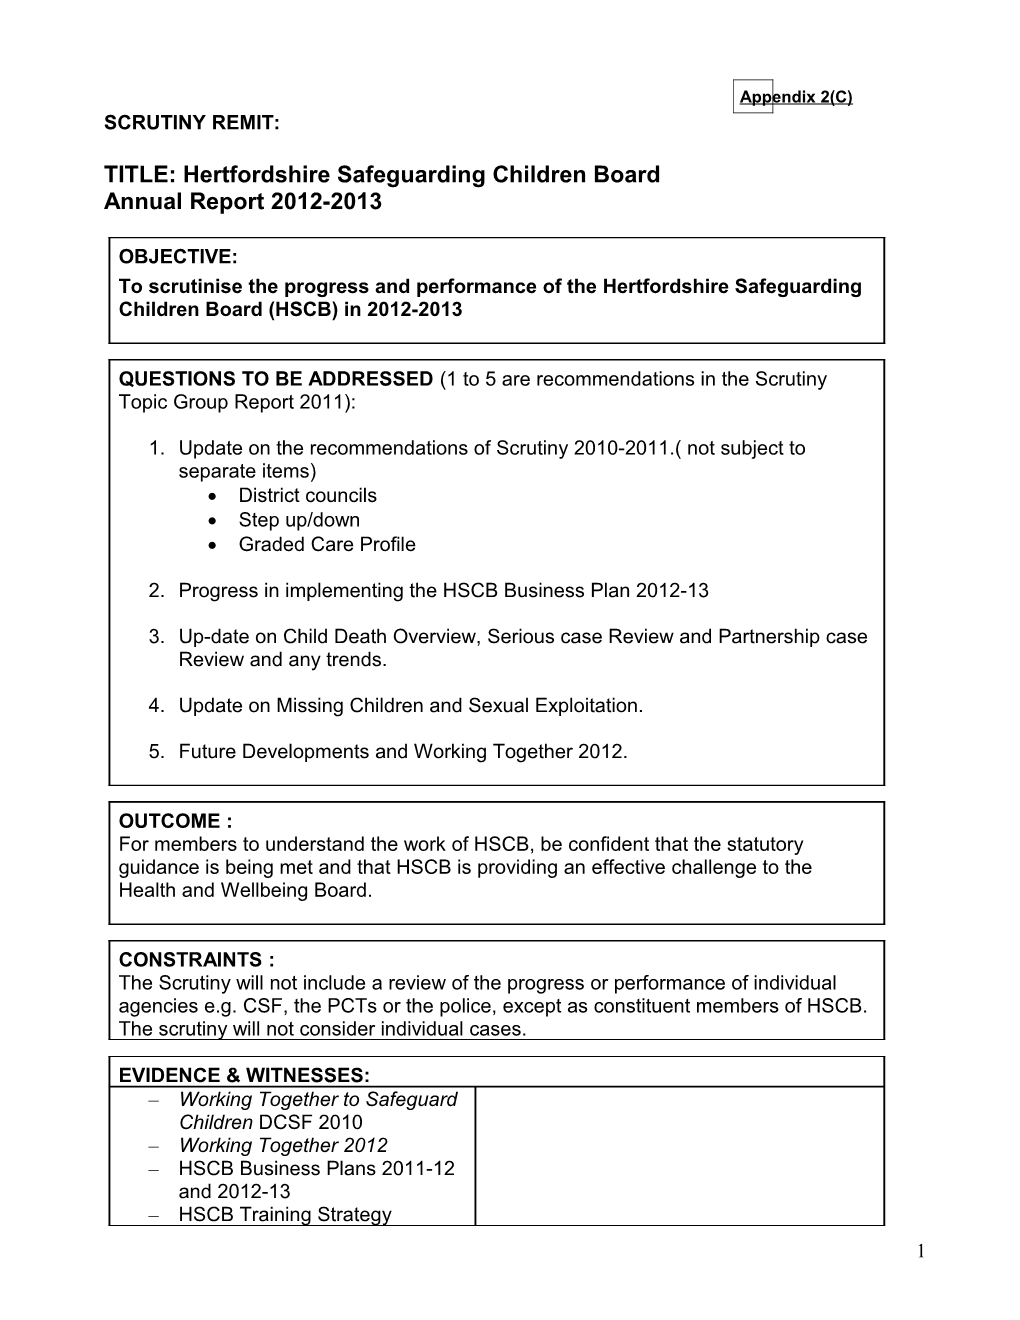 TITLE: Hertfordshire Safeguarding Children Board